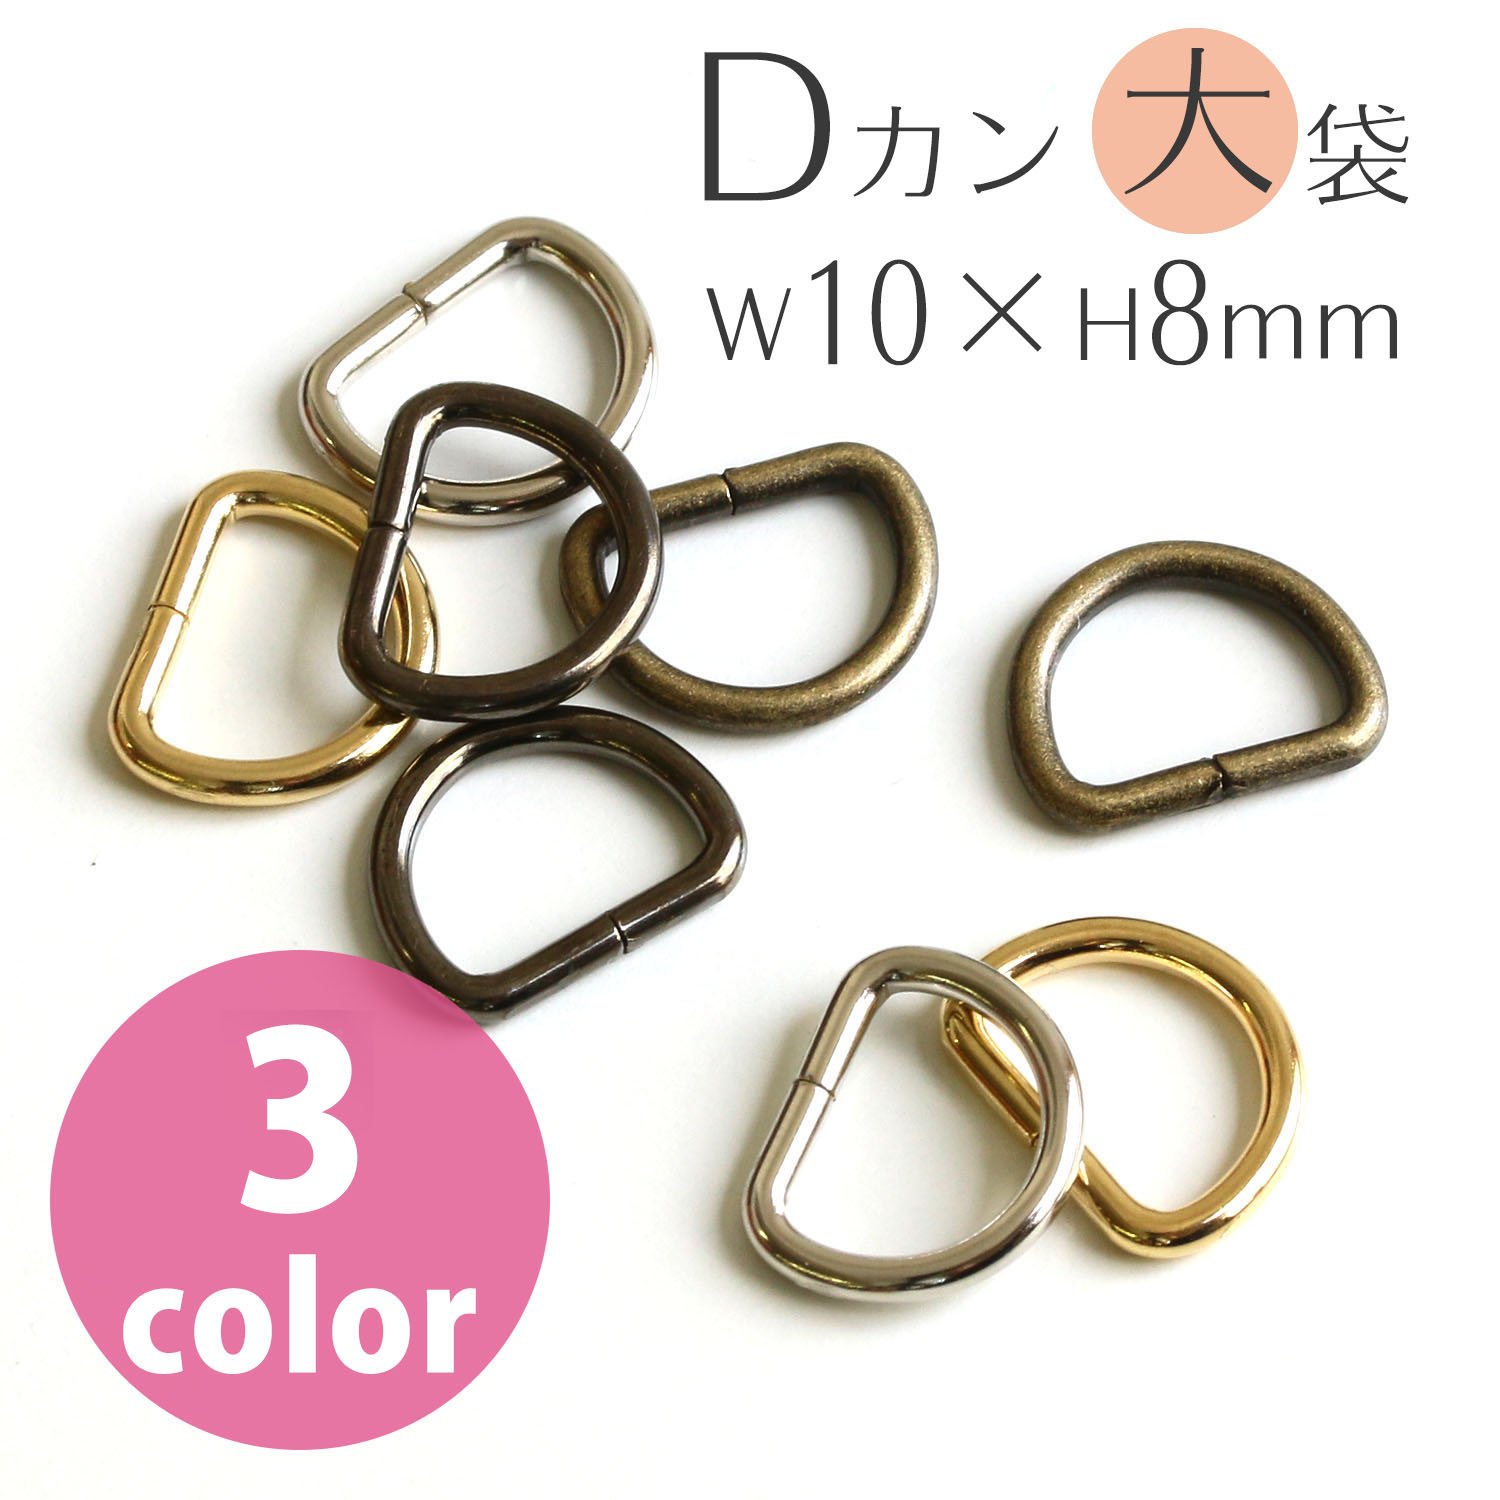 S22 D-Ring  10 x 8mm, diameter 1.8mm 120pcs (bag)